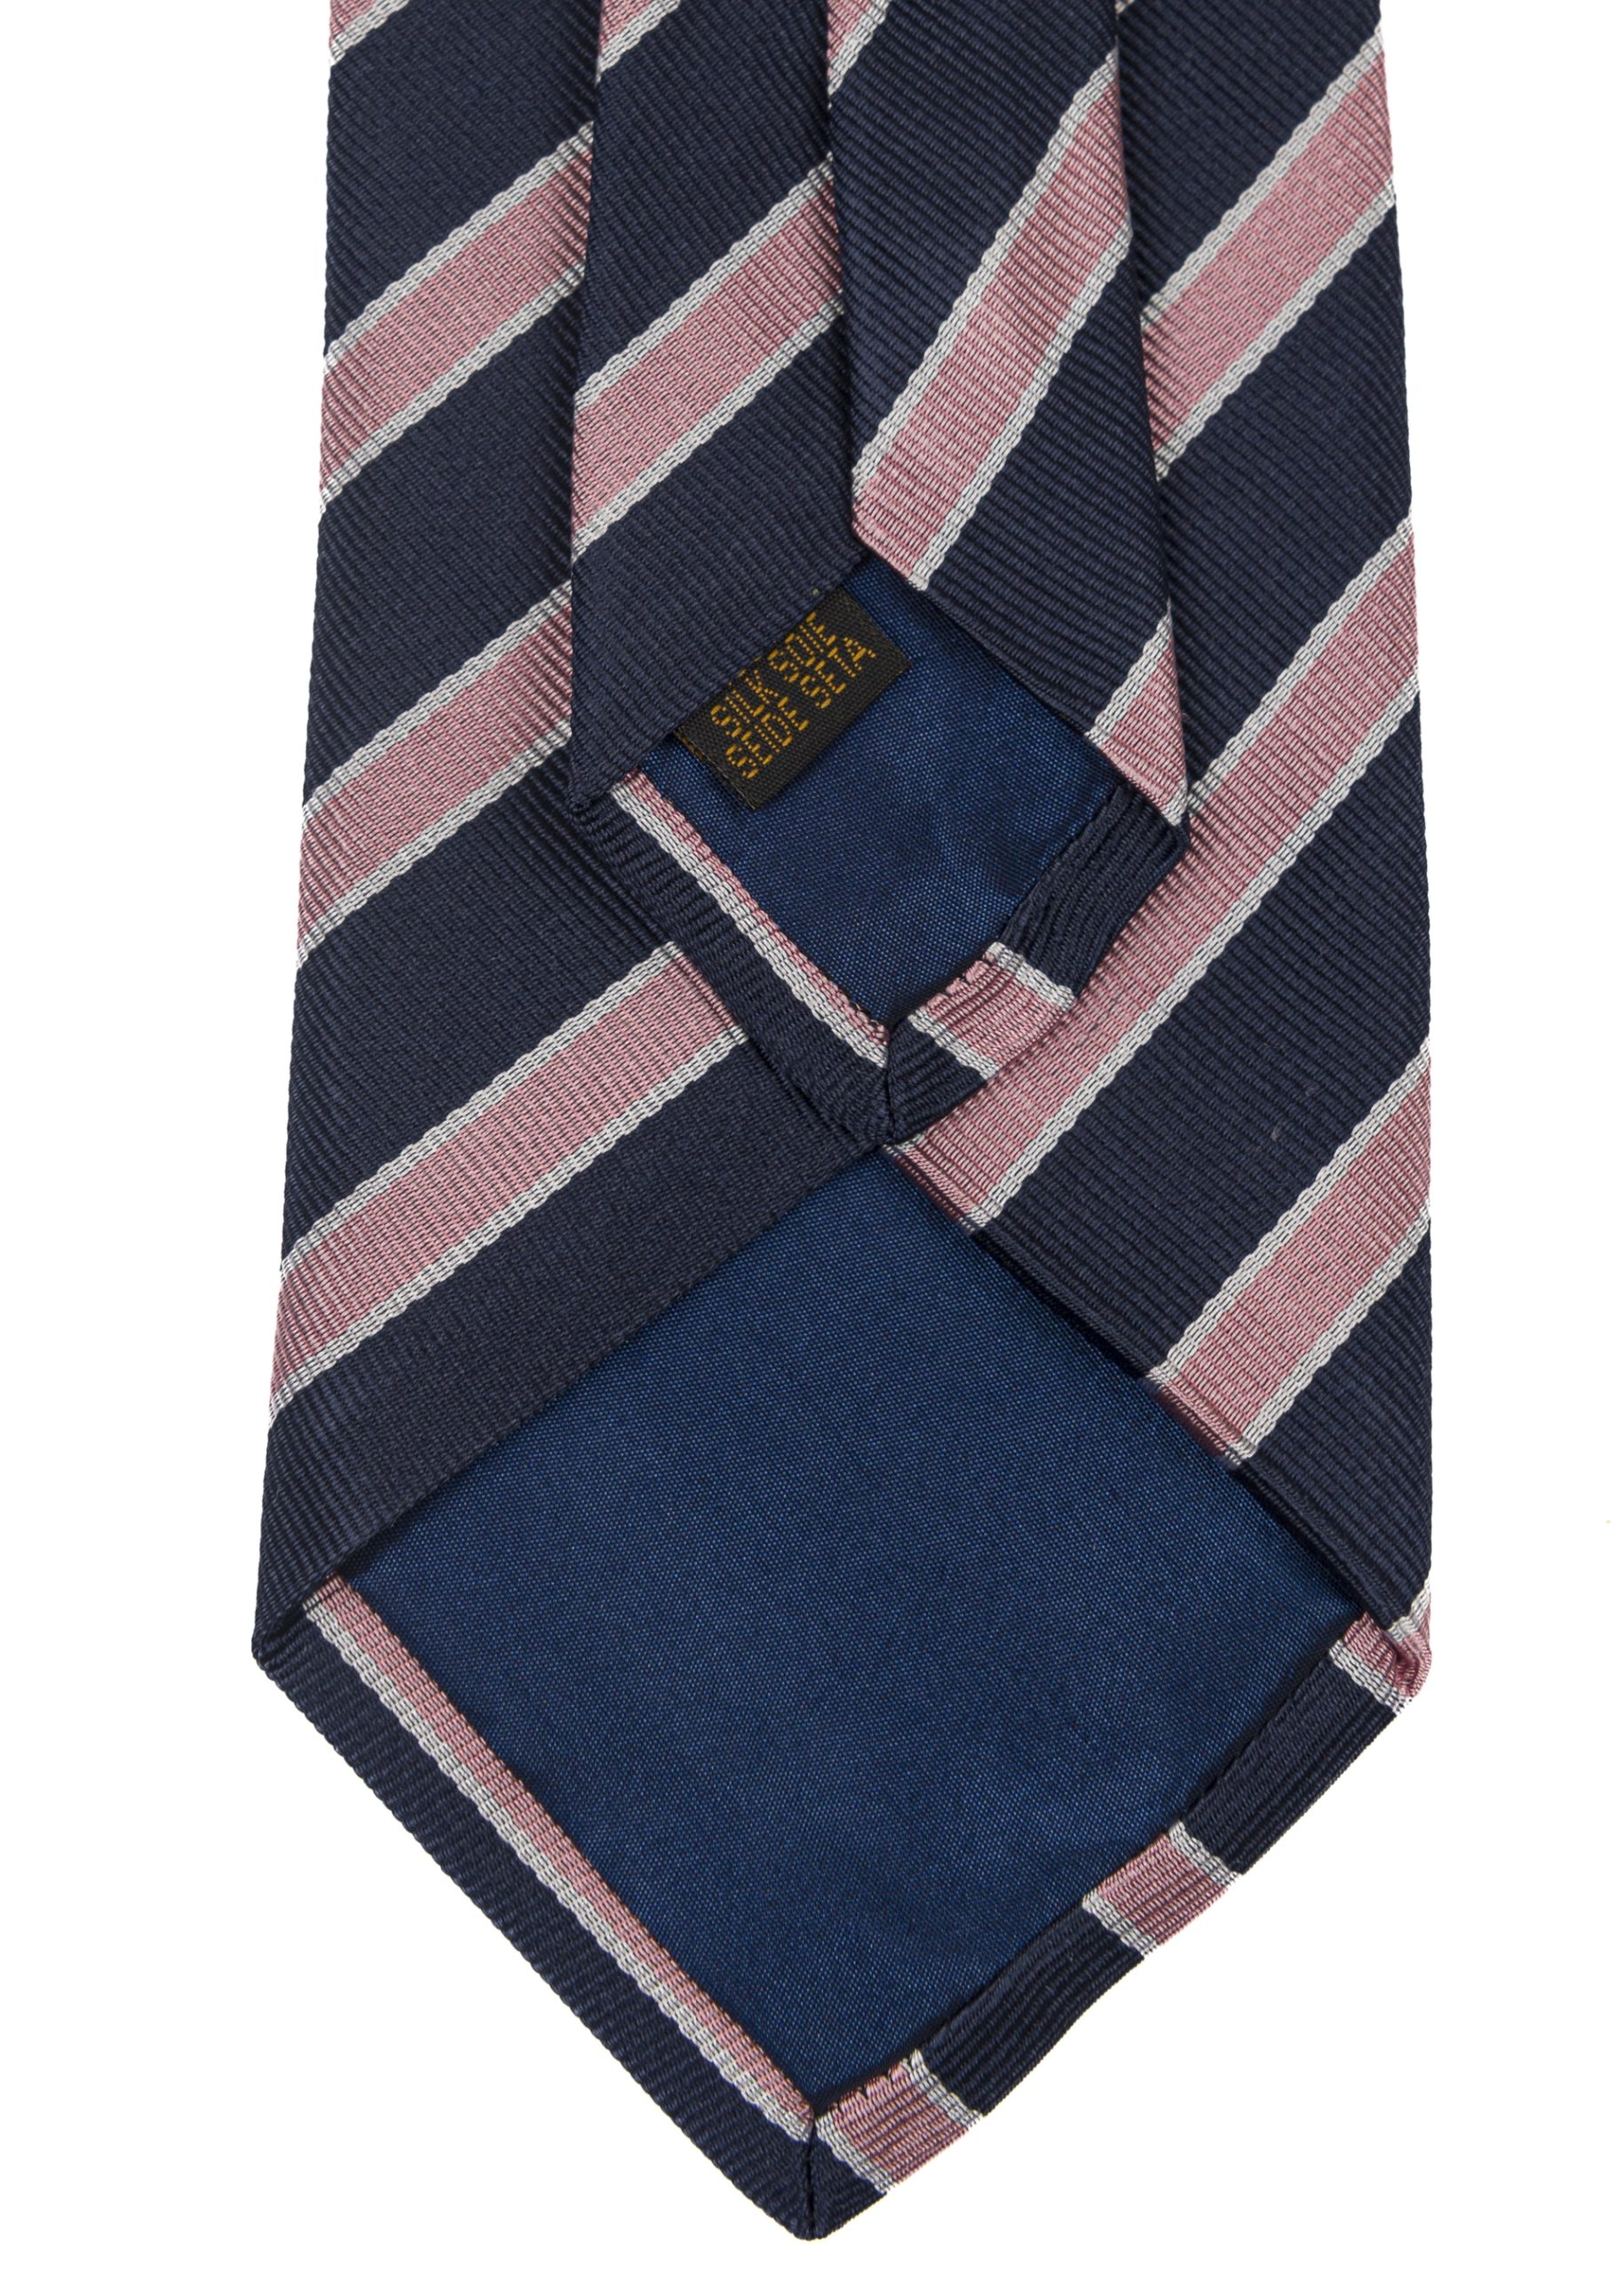 Roderick Charles block stripe tie